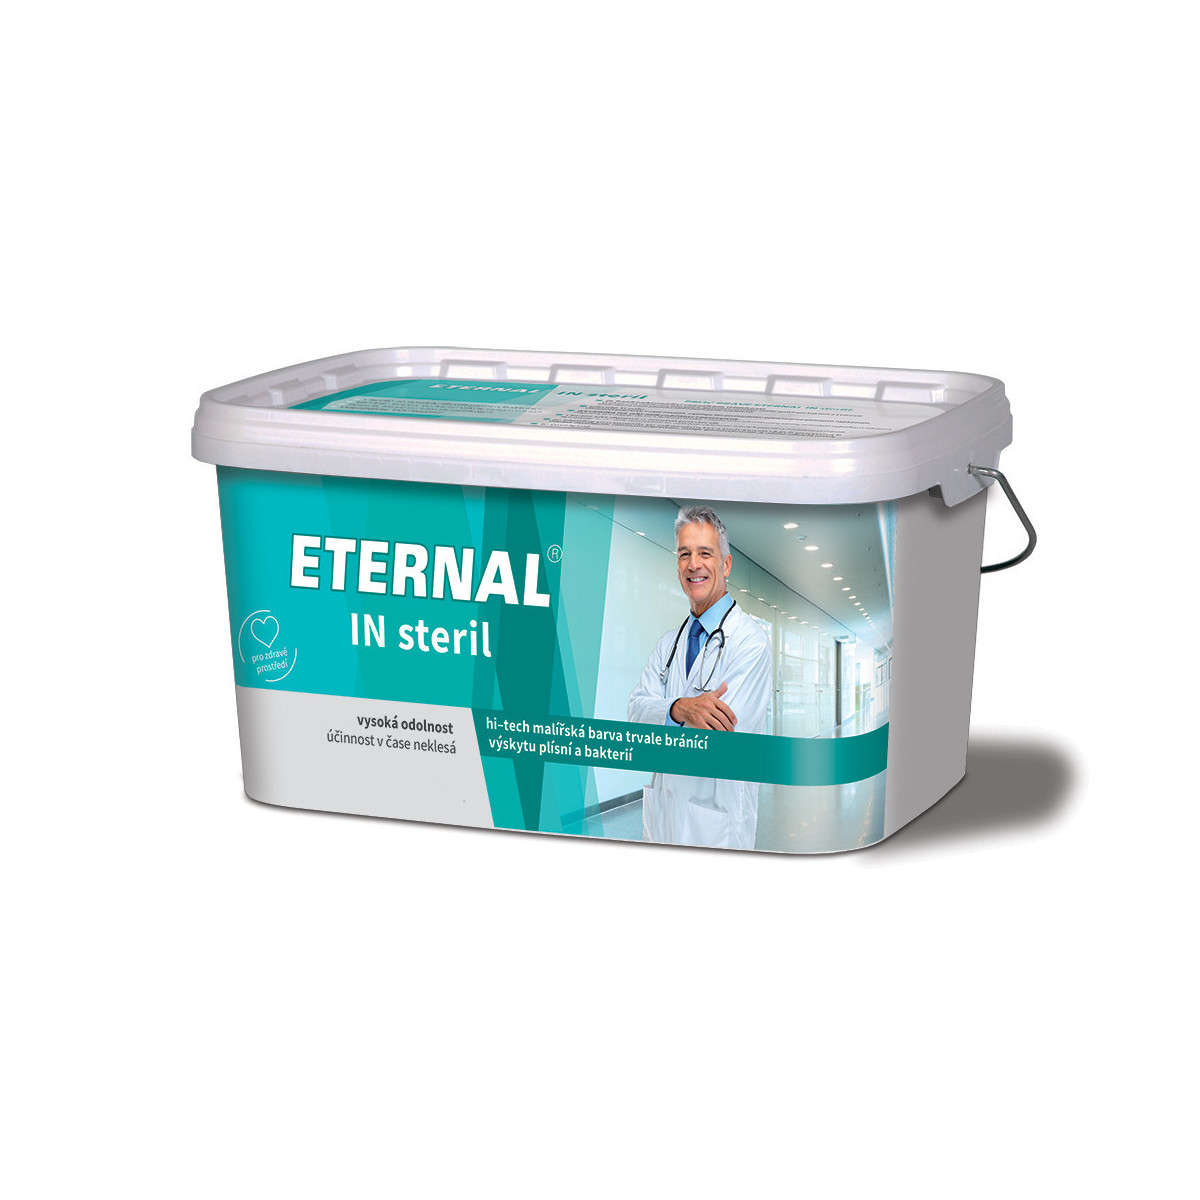 Eternal in steril